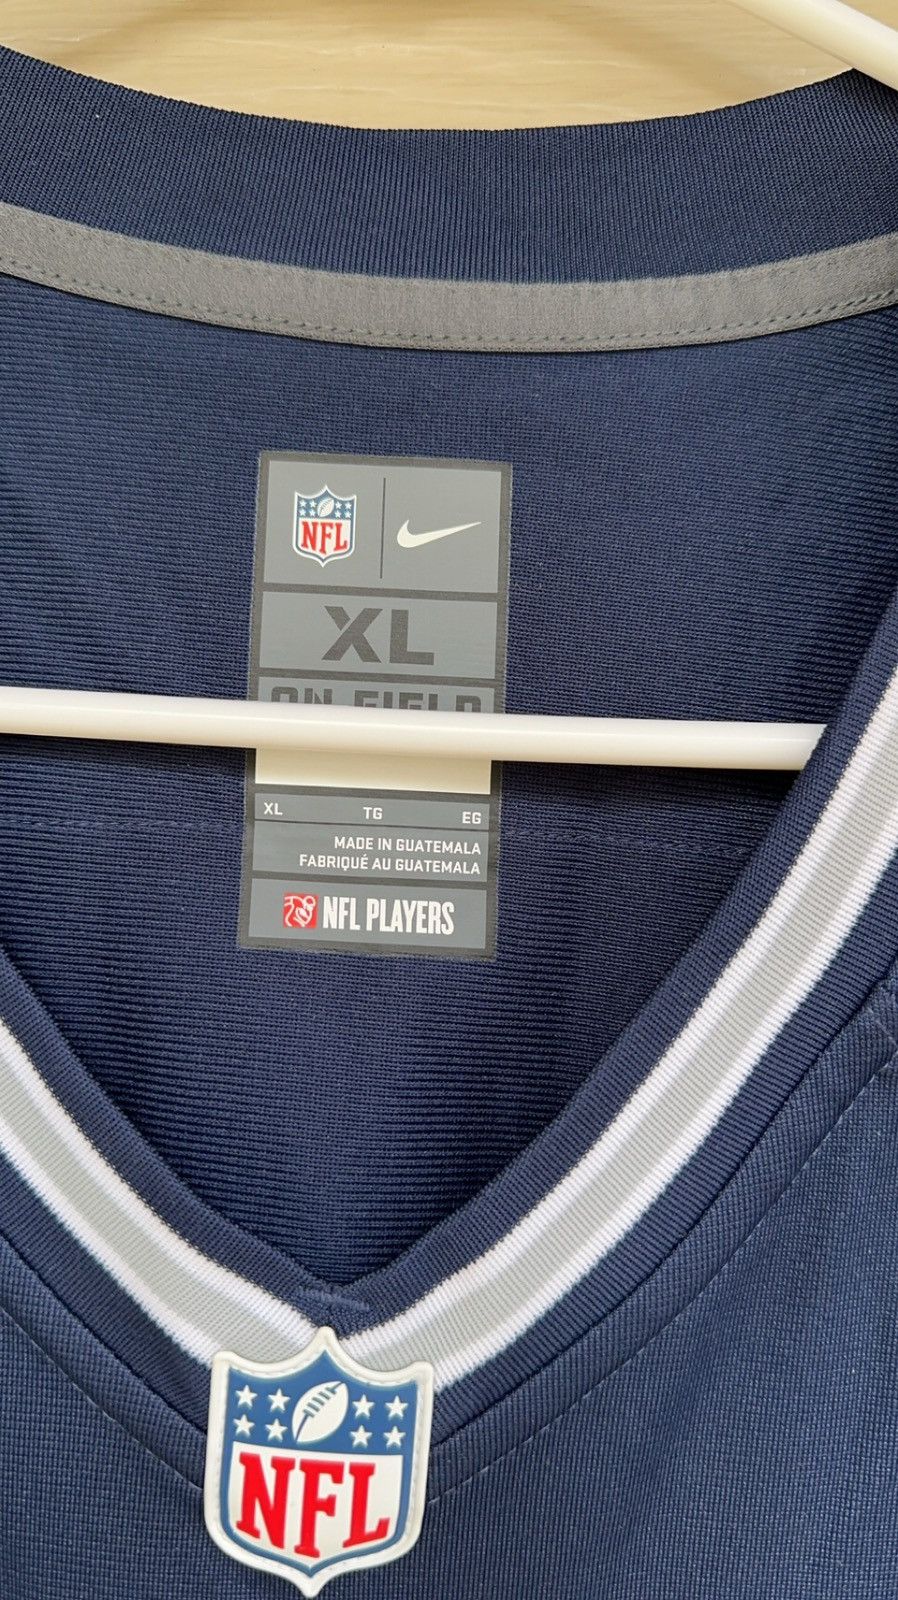 Nike Nike CeeDee Lamb Dallas Cowboys NFL Jersey Men’s XL Blue Size US XL / EU 56 / 4 - 6 Thumbnail